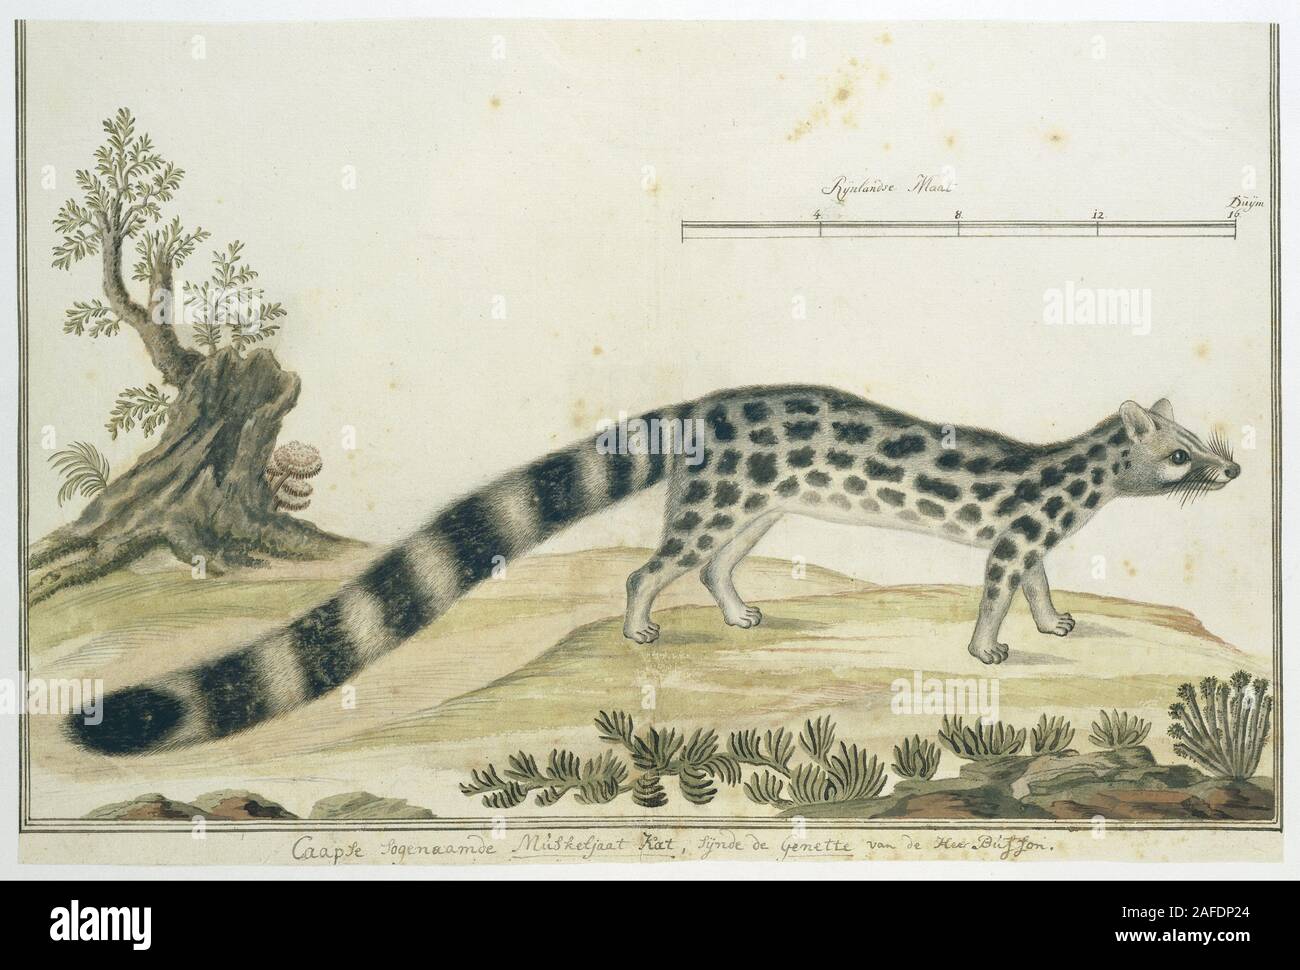 Genetta tigrina (Cape genet), Robert Jacob Gordon, 1777 - 1786.jpg - 2AFDP24 Stock Photo